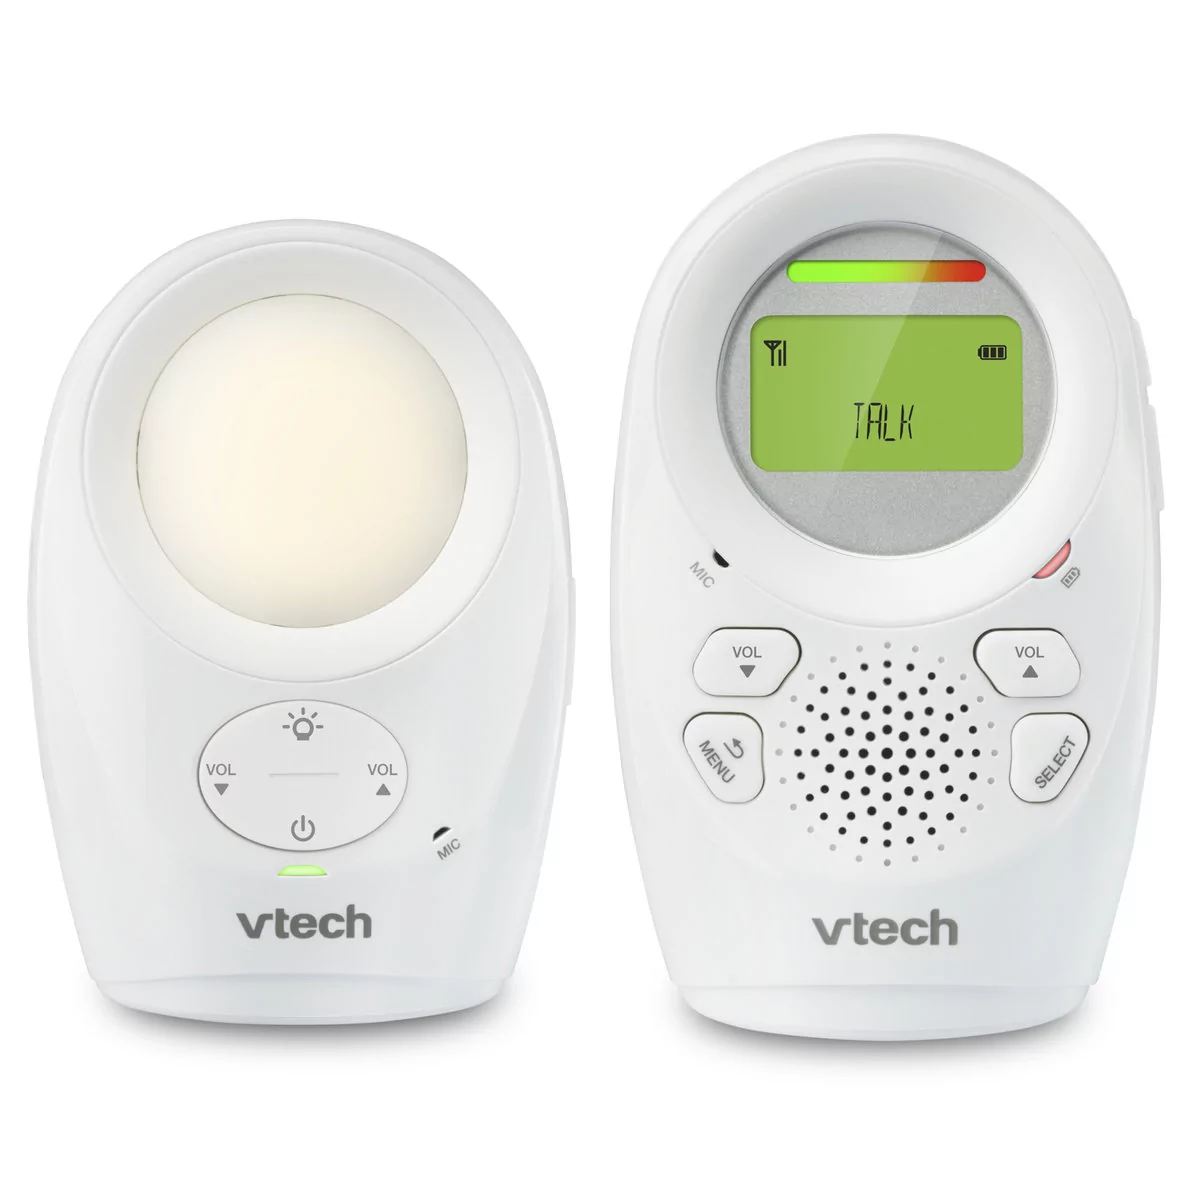 Vtech VTDM1211